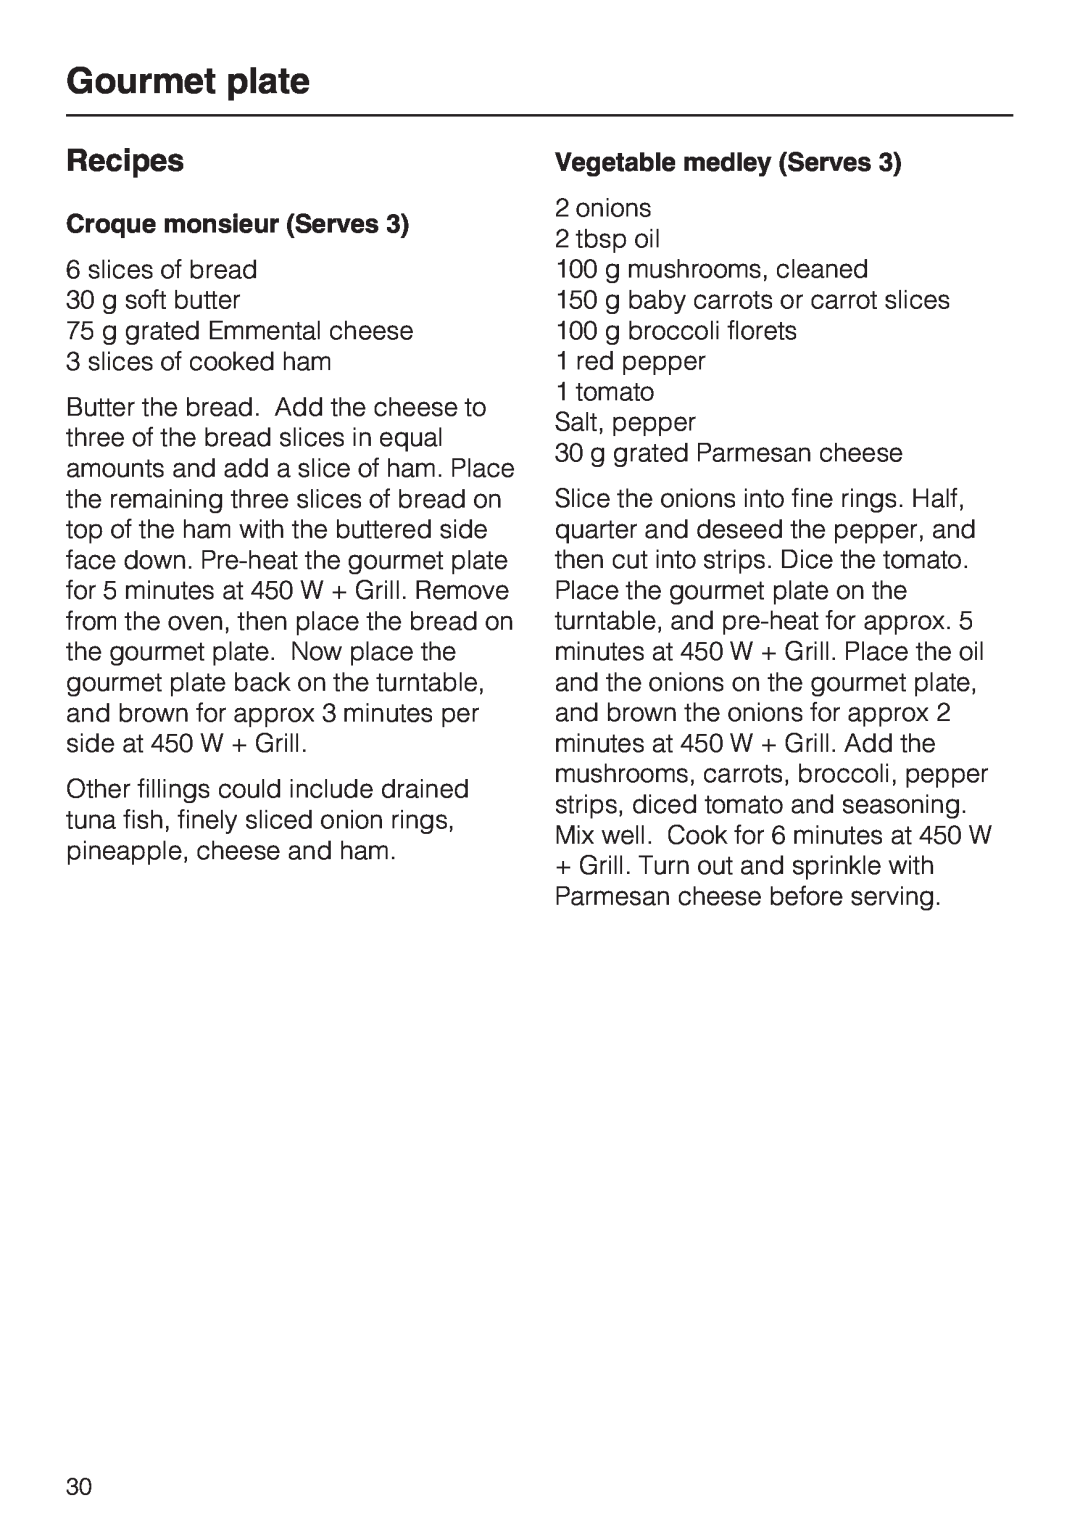 Miele M 8151-1, M 8161-1 manual Recipes, Croque monsieur Serves, Vegetable medley Serves, Gourmet plate 